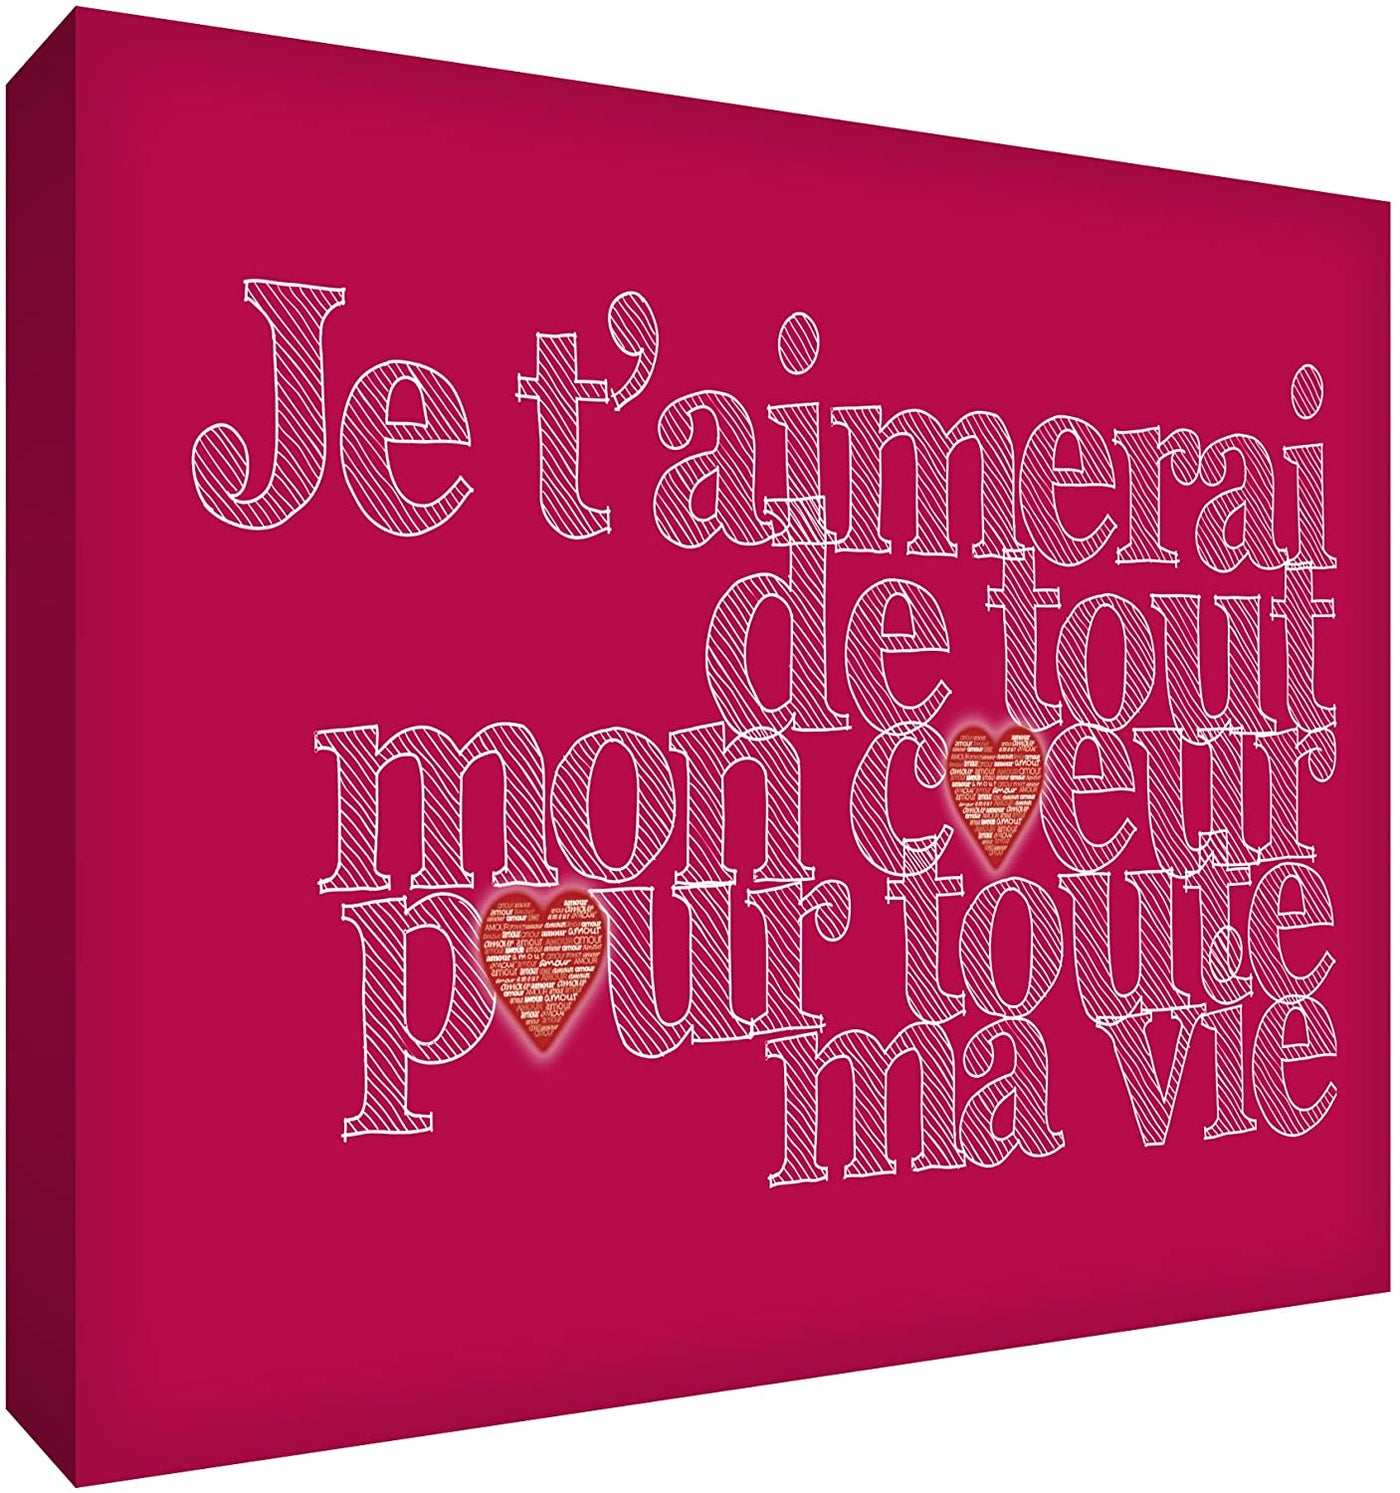 Feel Good ArtCanvas Art with French Text - J'aimerai de tout mon coeur pour toute la vieSize Name: 30 x 40 cmColour Name: Vintage Pinknursery artEarthlets